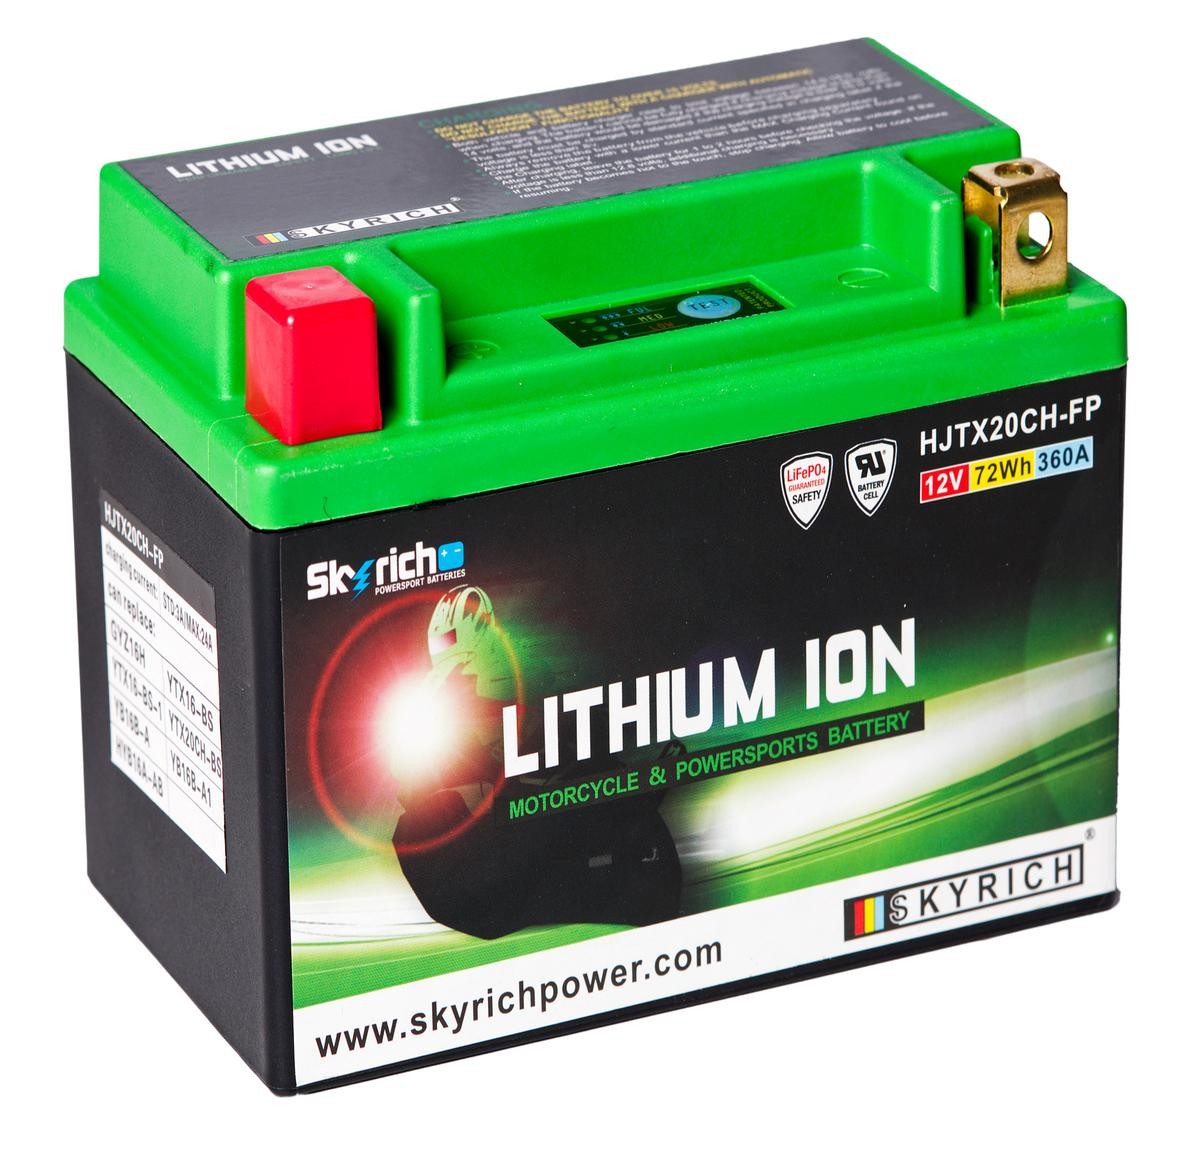 SKYRICH LITHIUM ION 12V 6Ah 360A N Li-Ion Battery Cold-test Current, EN: 360A, Voltage: 12V, Terminal Placement: 1 Starter battery HJTX20CH-FP buy